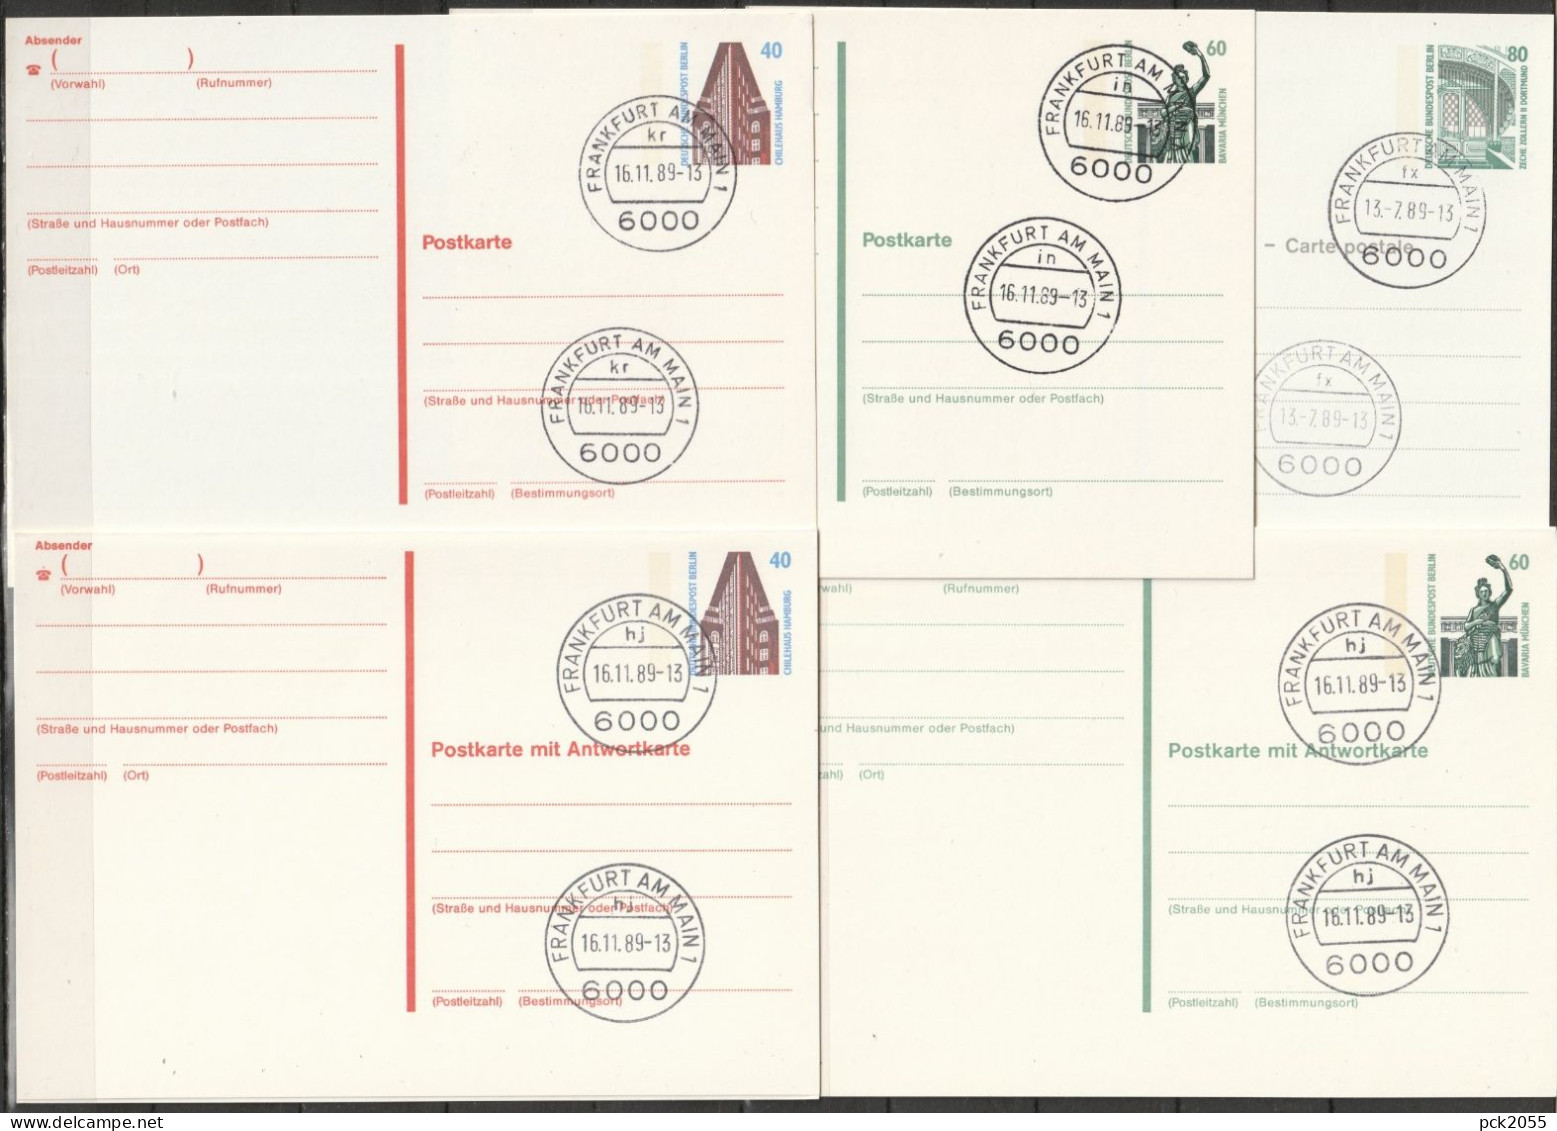 Berlin Ganzsache 1988 Mi.-Nr. P129 - P133  Tagesstempel FRANKFURT  13.7.89- 16.11.89  ( PK 486 ) - Postcards - Used